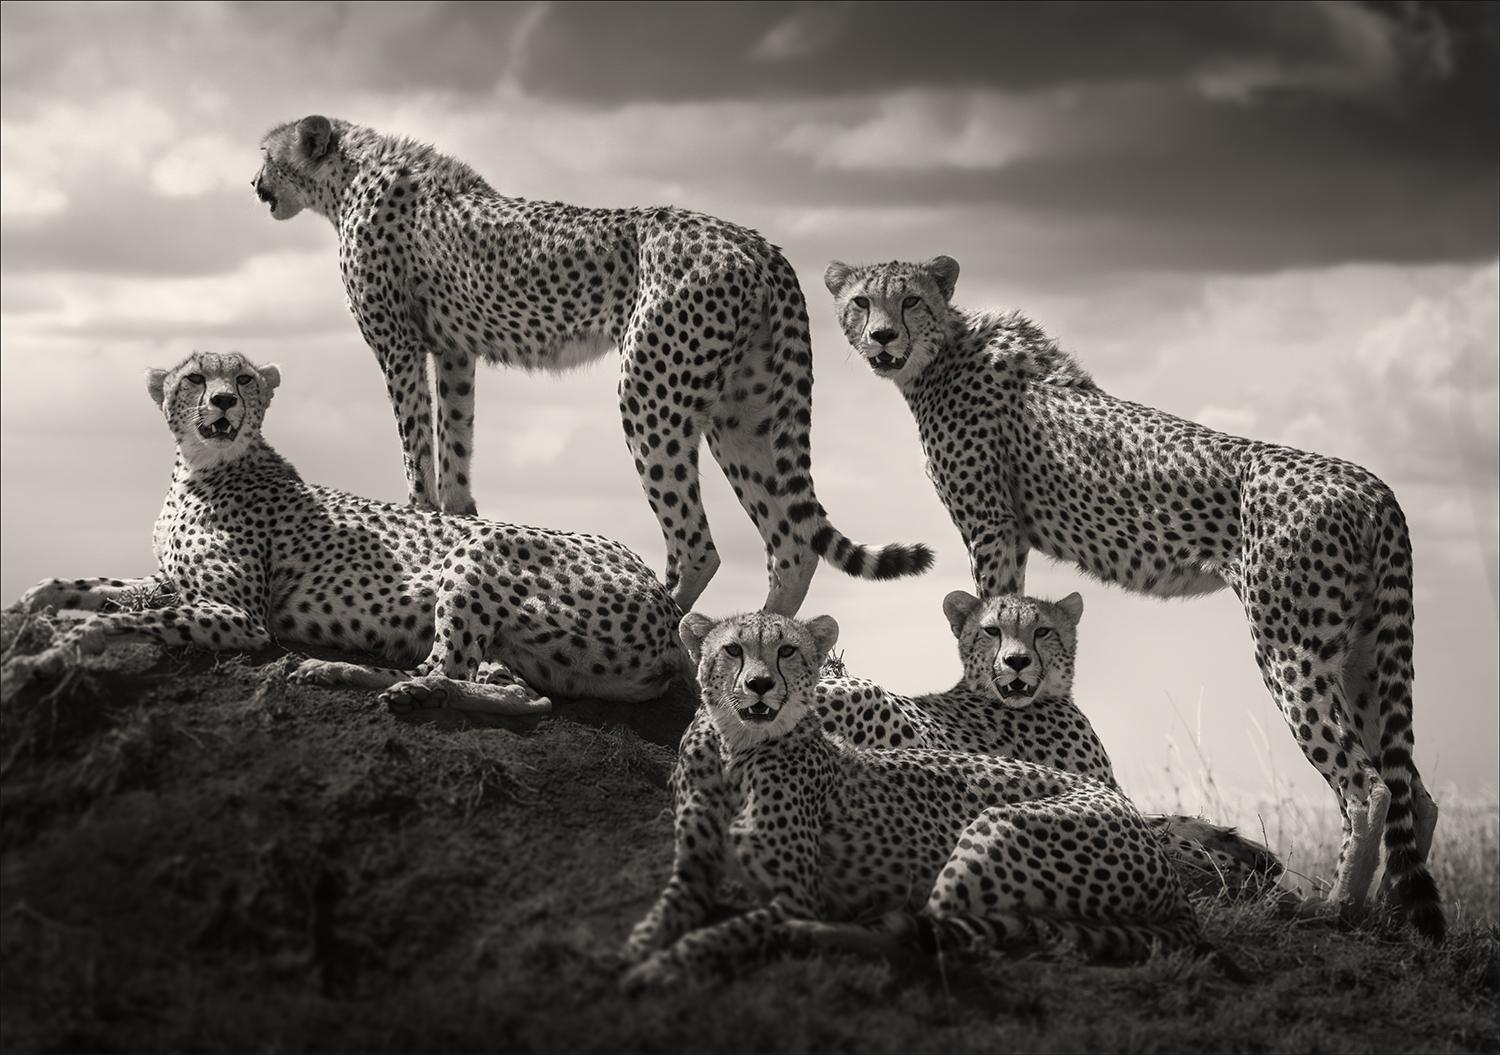 Joachim Schmeisser Black and White Photograph - Alliance II, animal, wildlife, black and white photography, cheetah